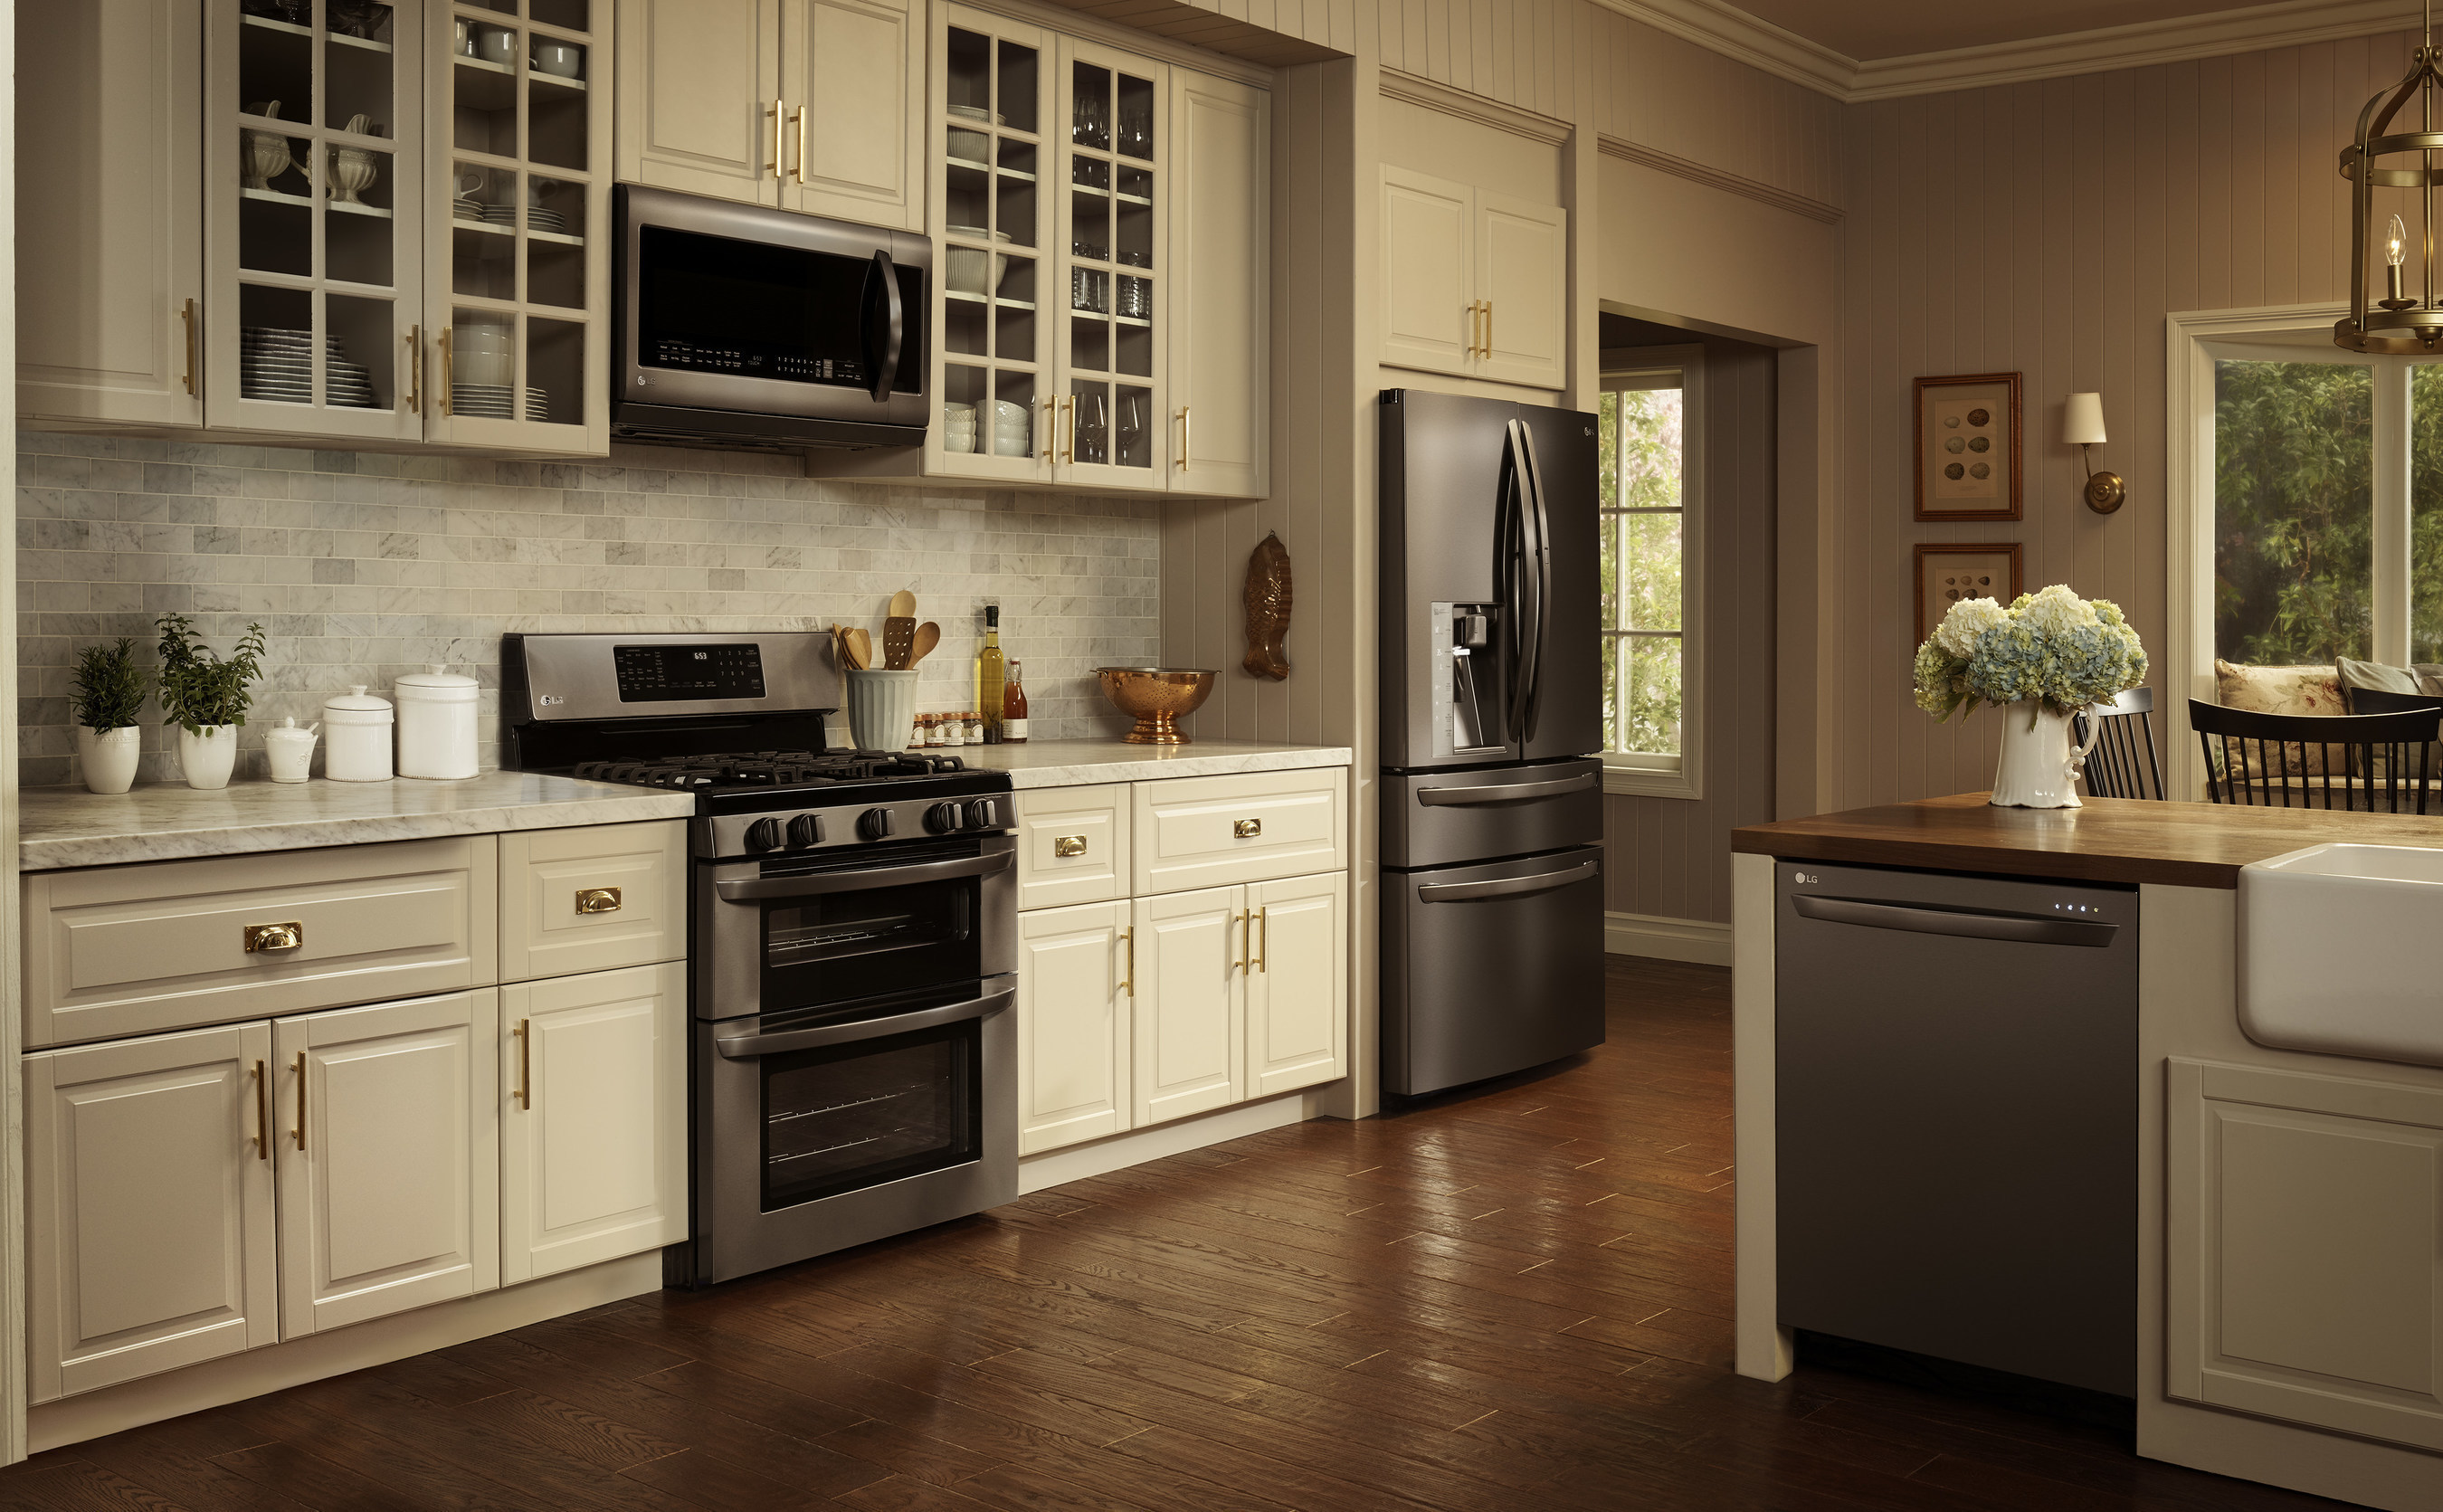 LG 'Black Stainless Steel' Kitchen Appliances Bring Bold